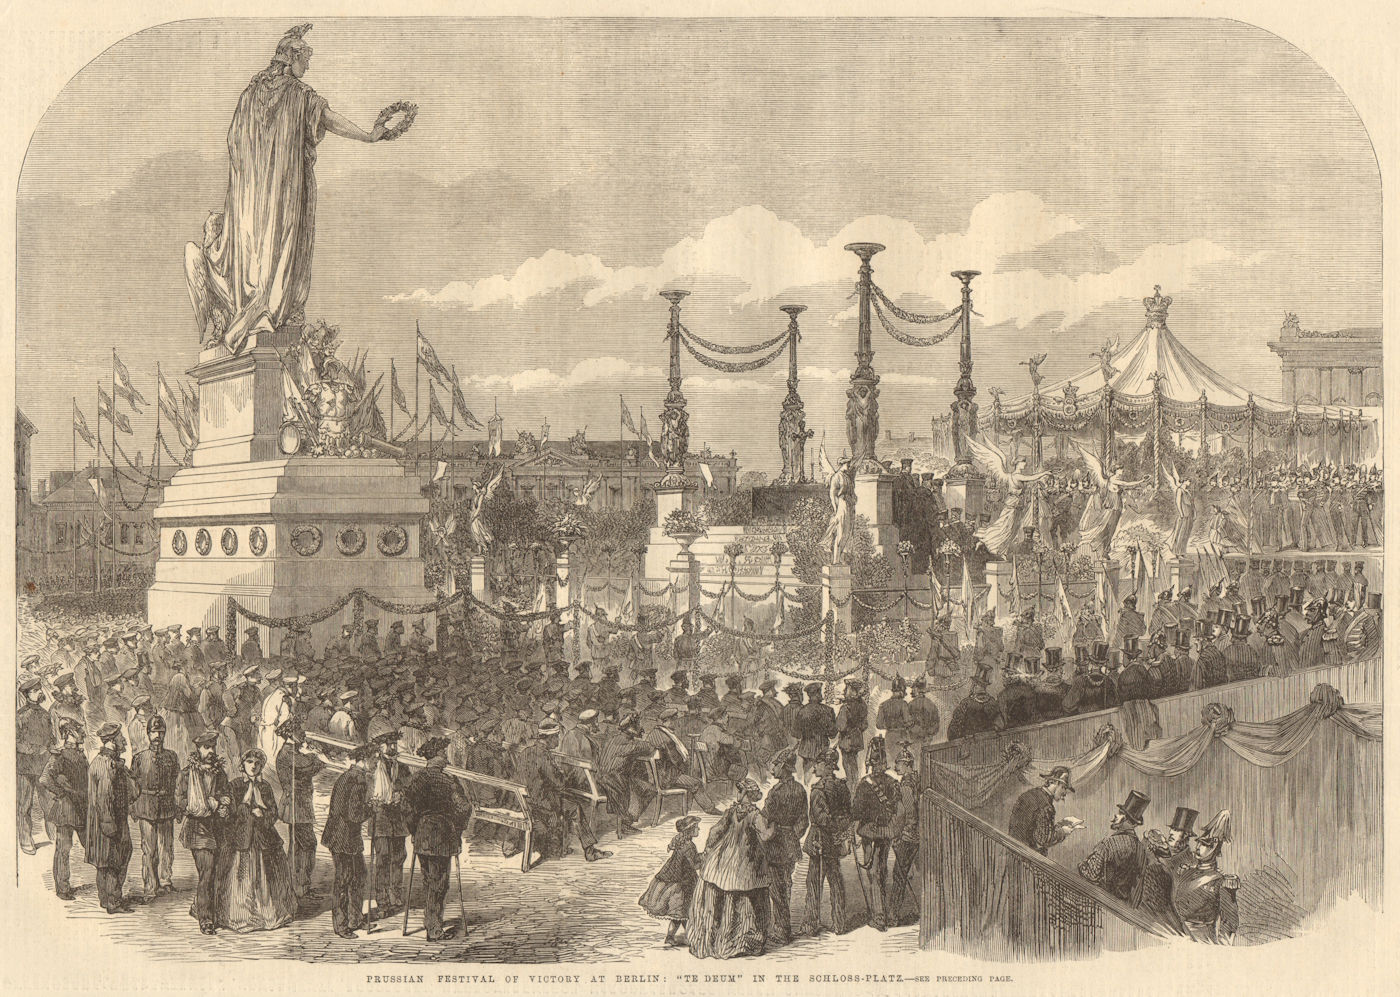 Prussian festival of victory at Berlin: "Te deum" in the Schloss-Platz 1866